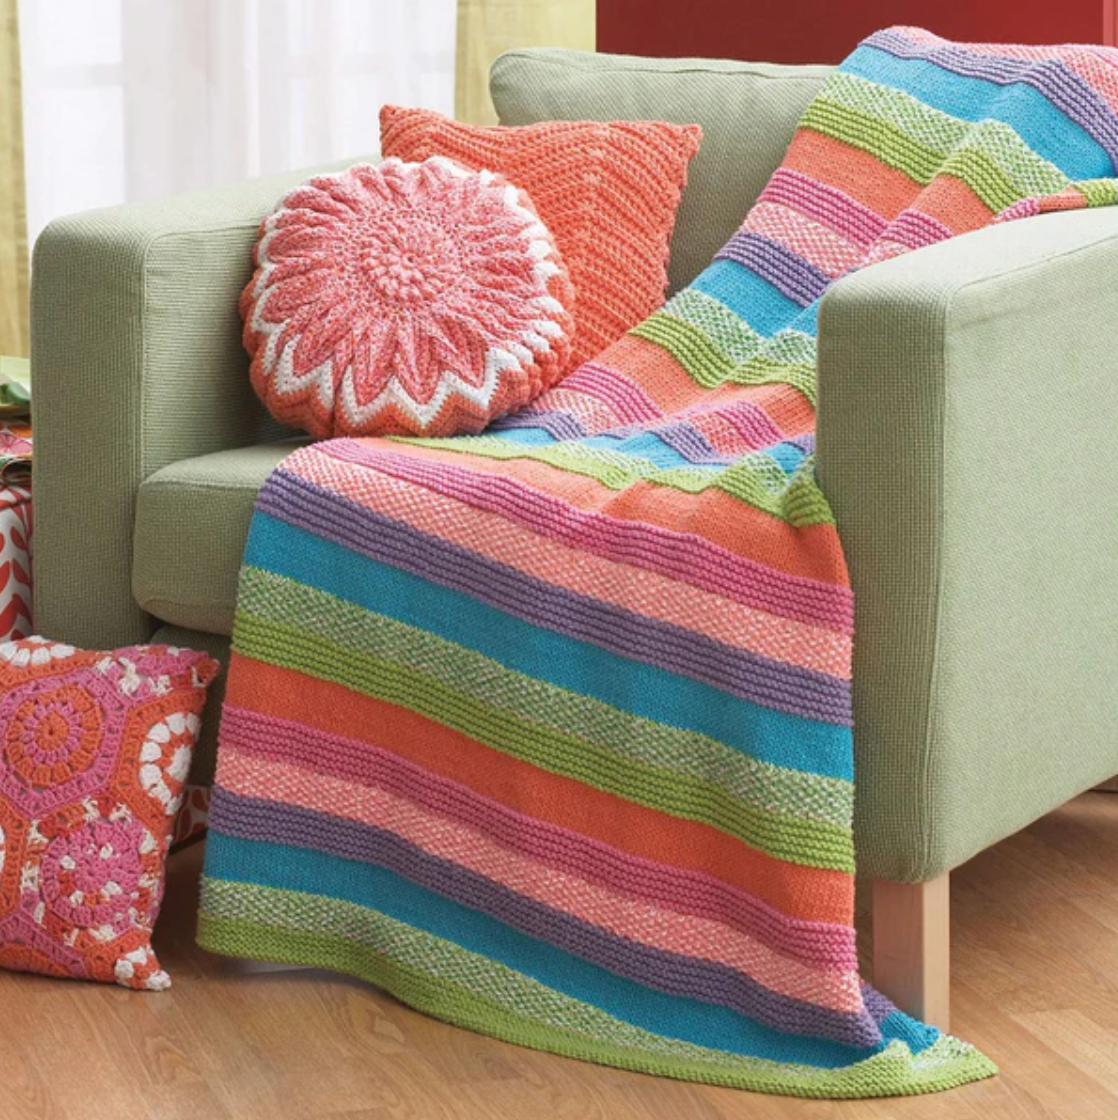 Lily Sugar N Cream Striped Knit Blanket Free Pattern